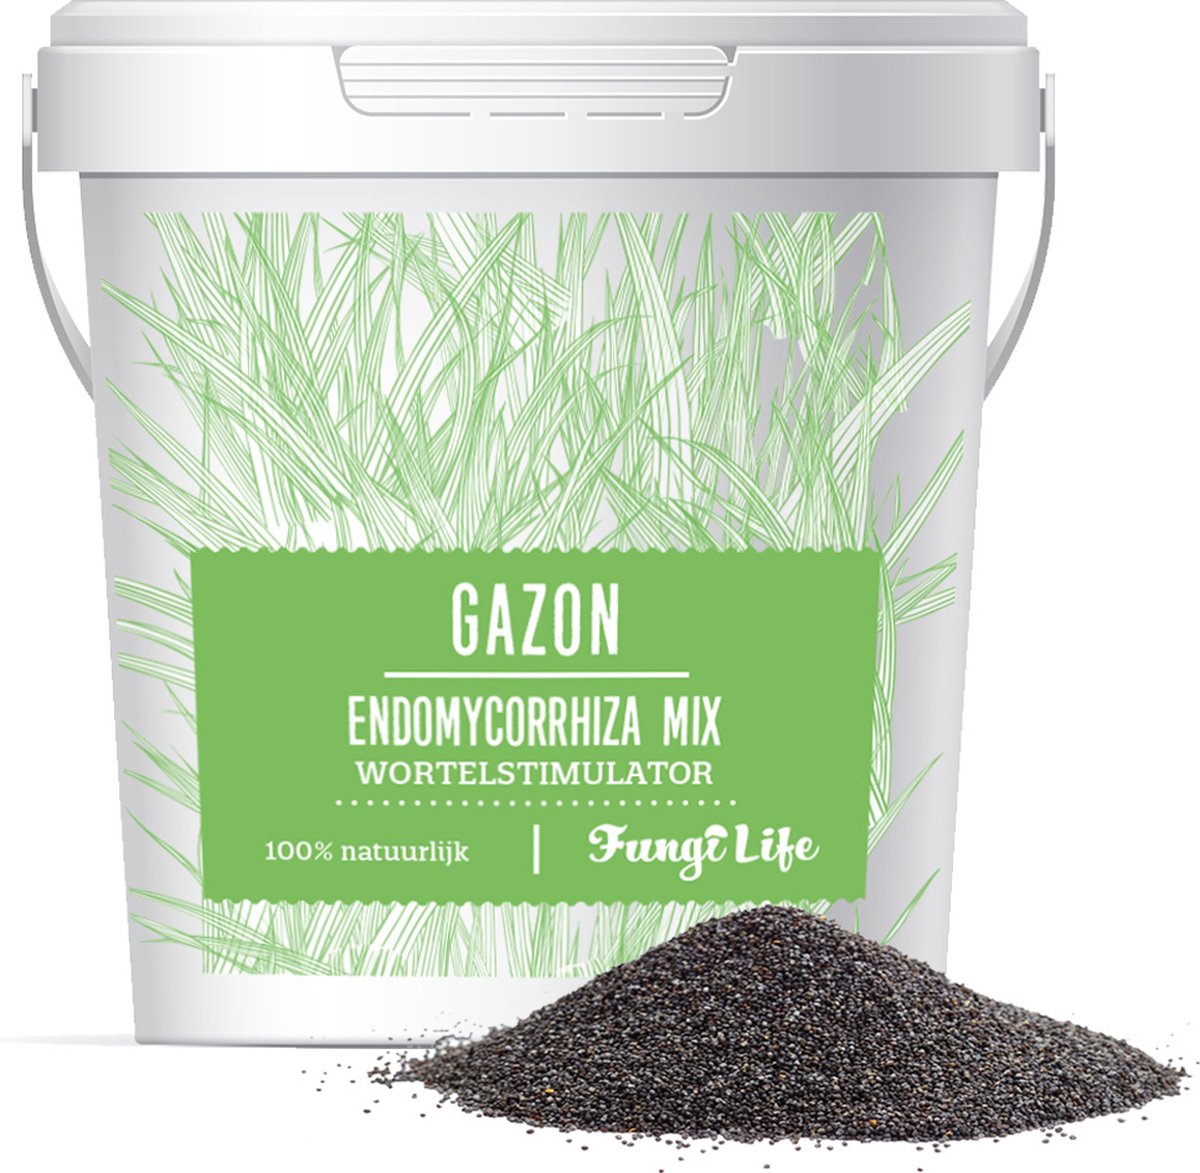 Mycorrhiza Mix Gazon 500Gr - FungiLife Endomycorrhiza